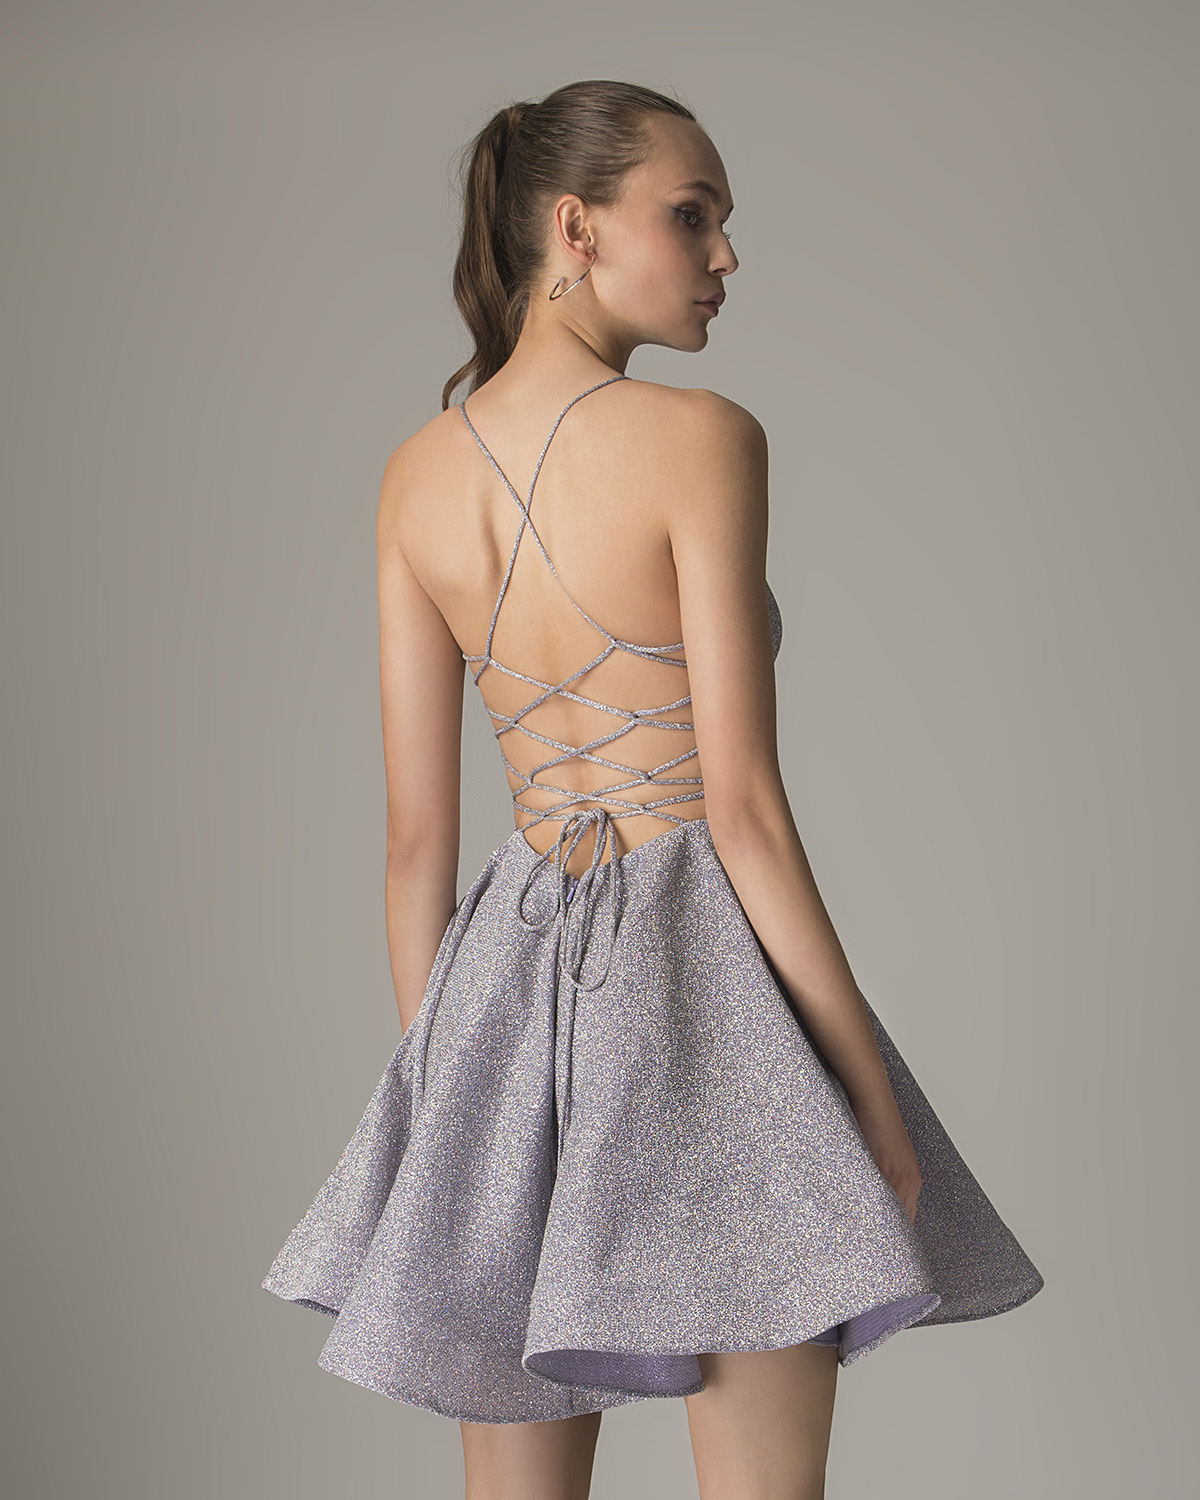 Коктейльные платья / Short cocktail dress with shining fabric and open back